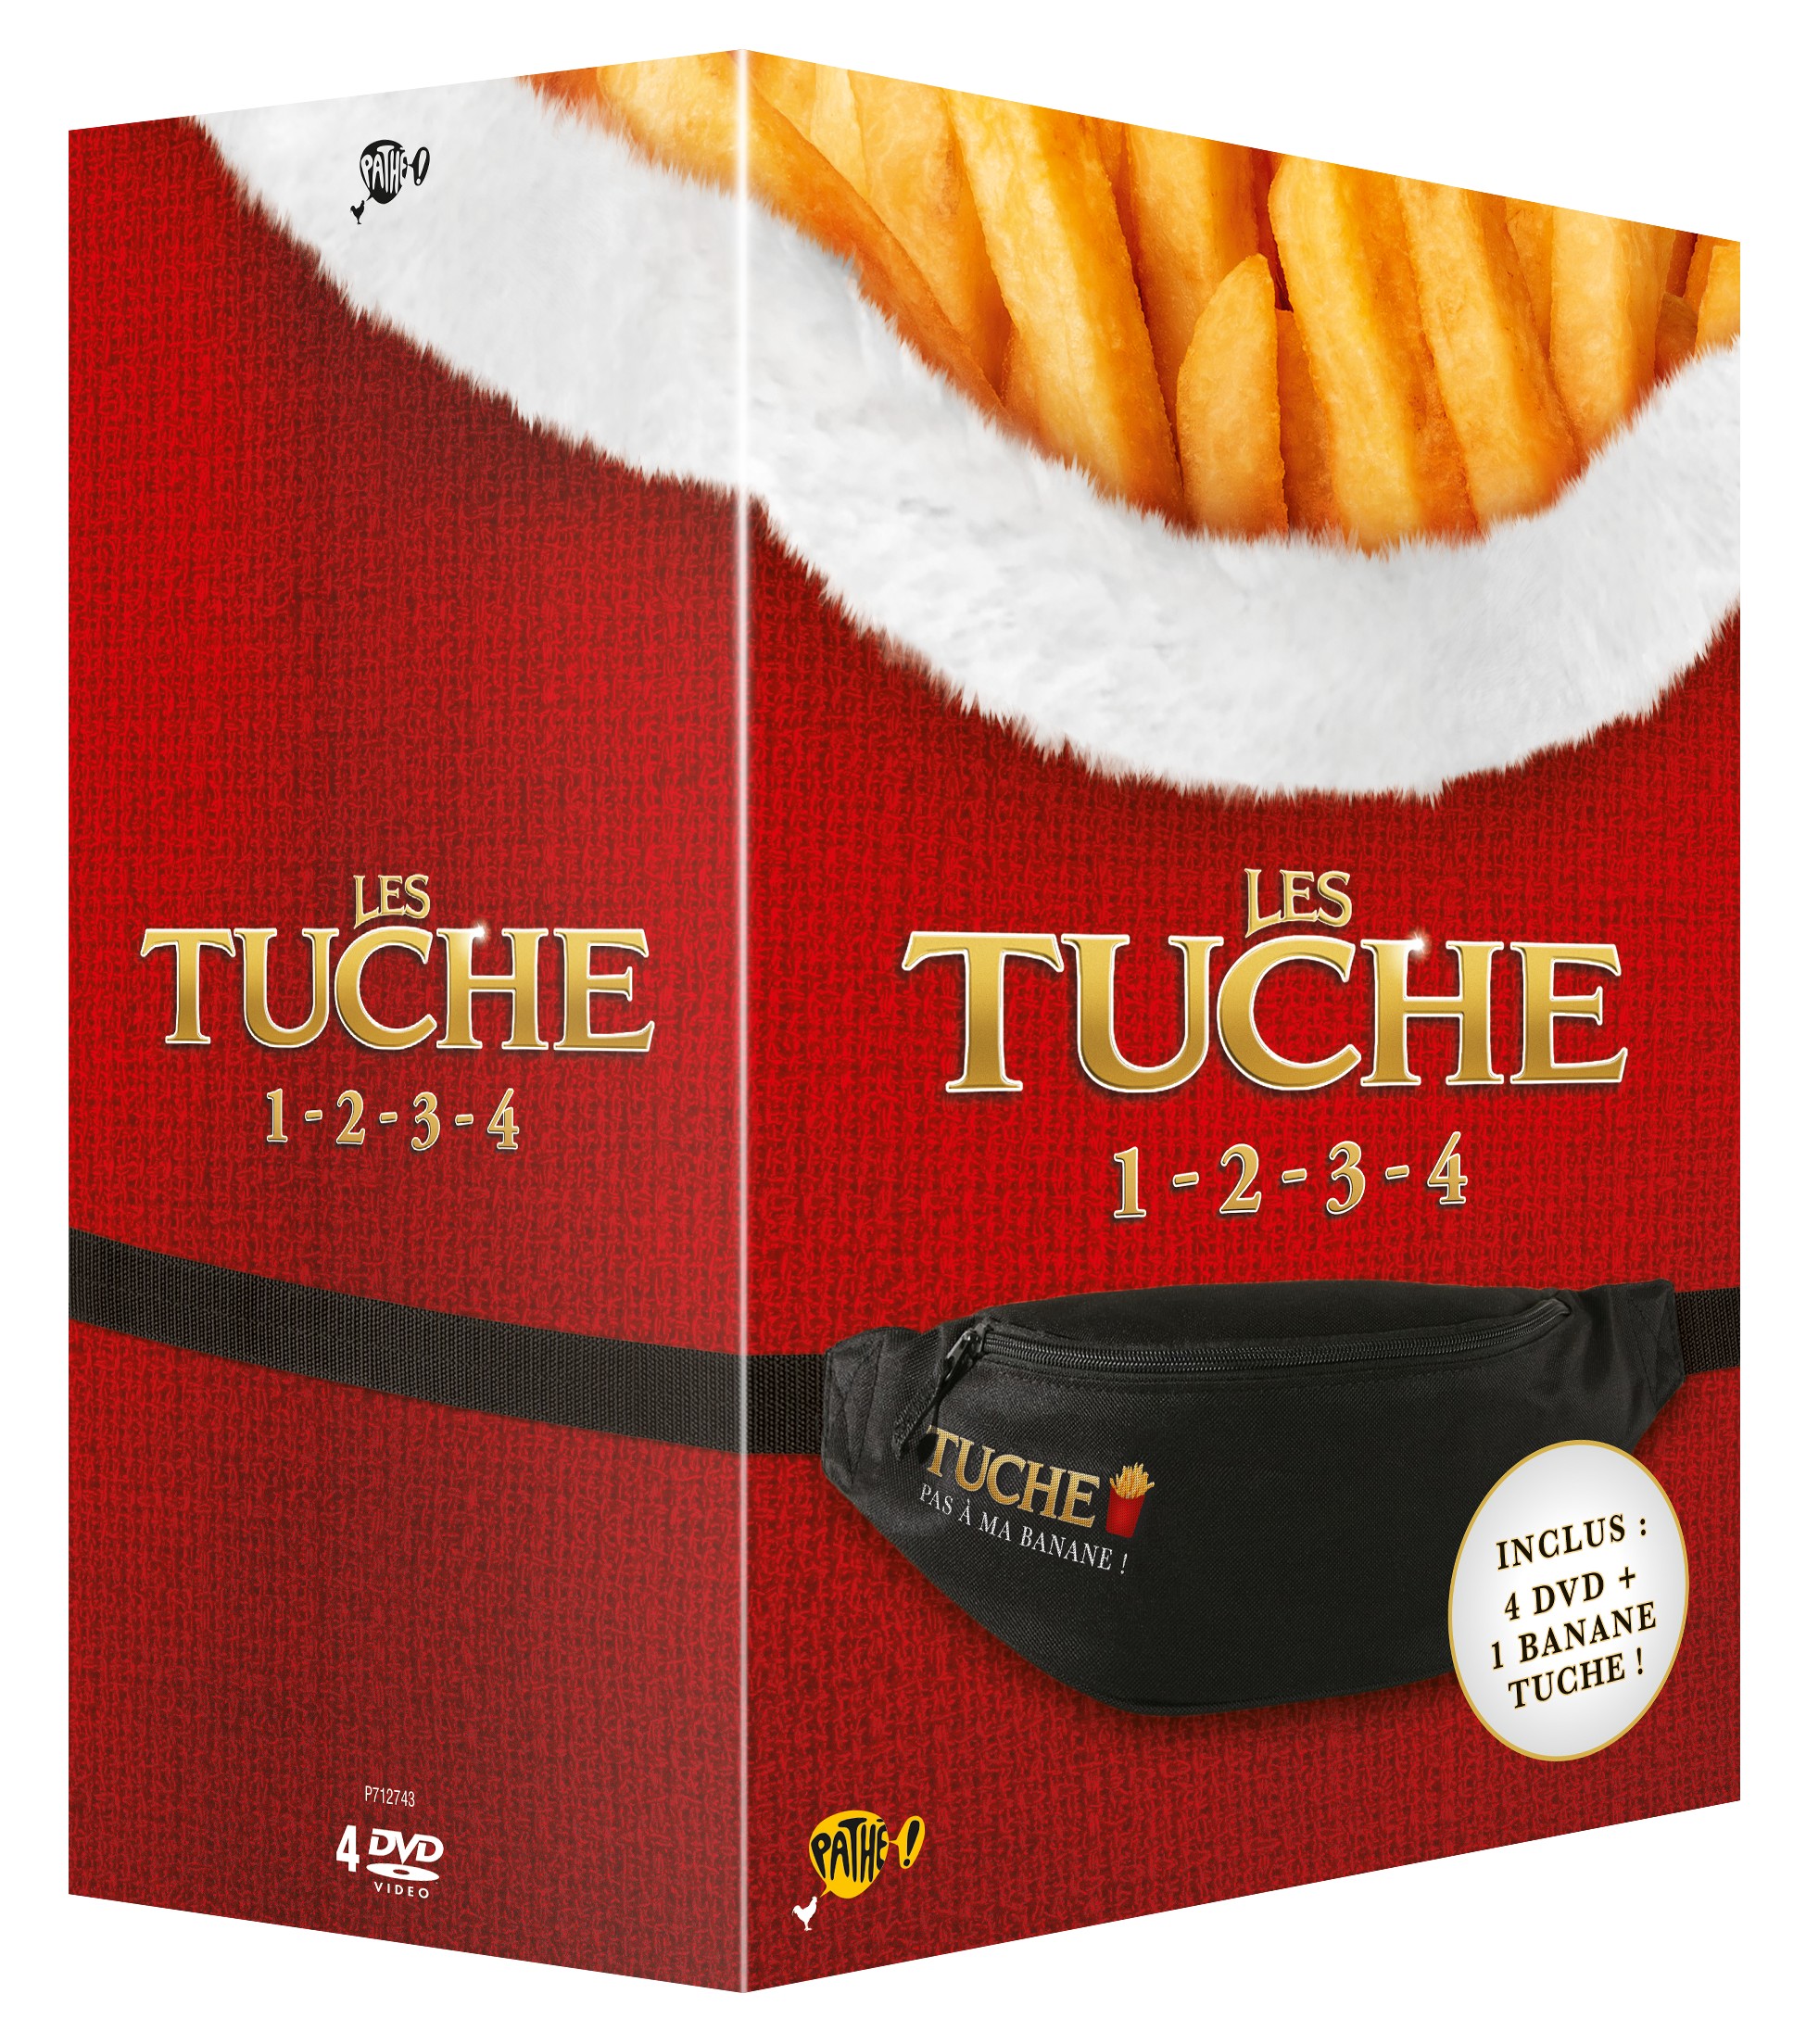 LES TUCHE - INTEGRALE VERSION EXCLUSIVE GOODIES - 4 DVD + 1 BANANE TUCHE